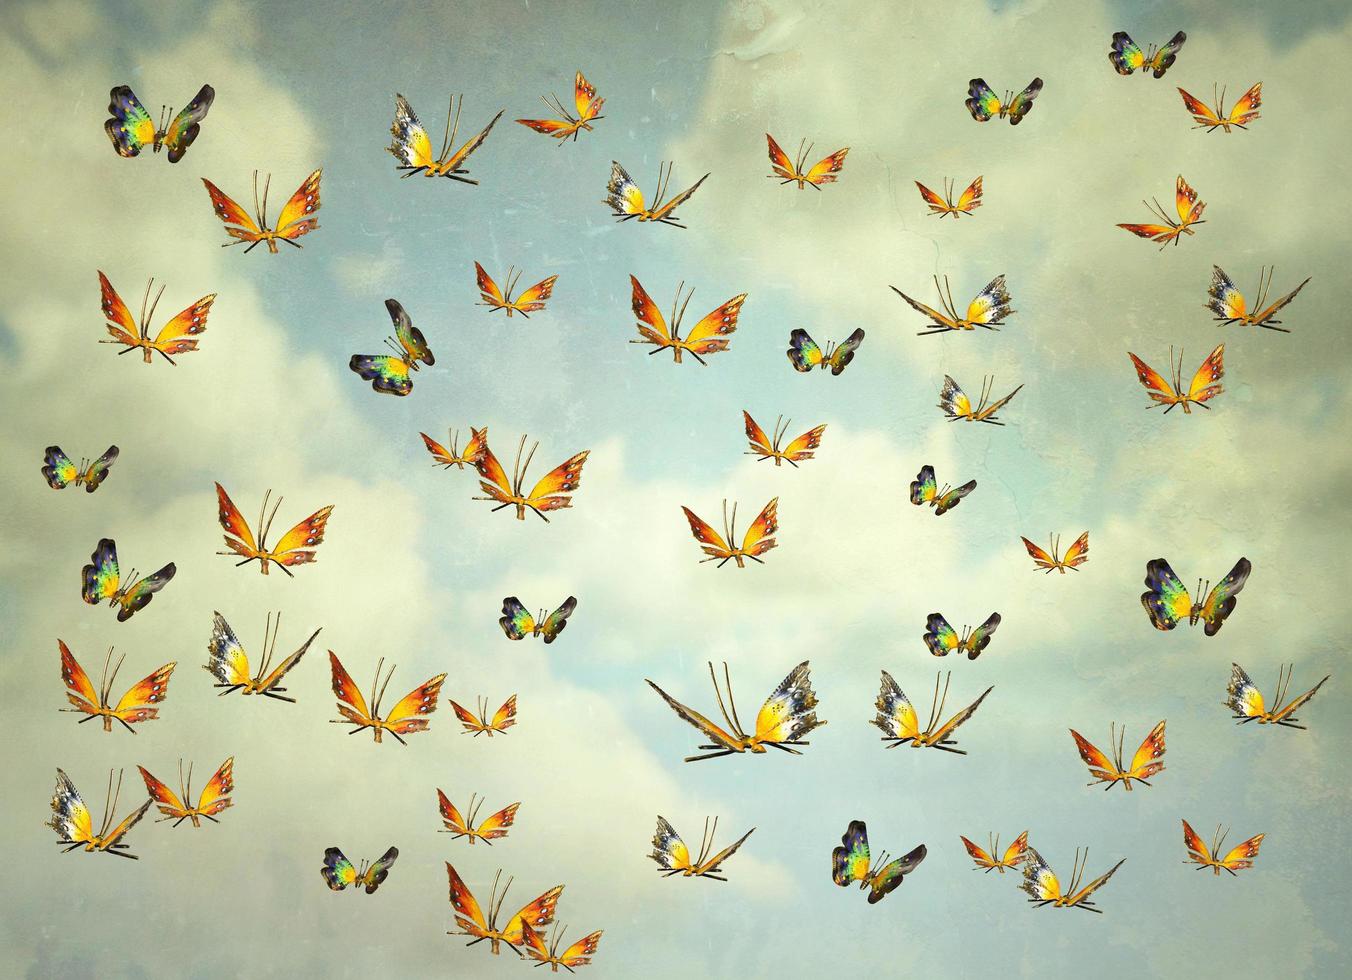 Butterflies in the sky photo